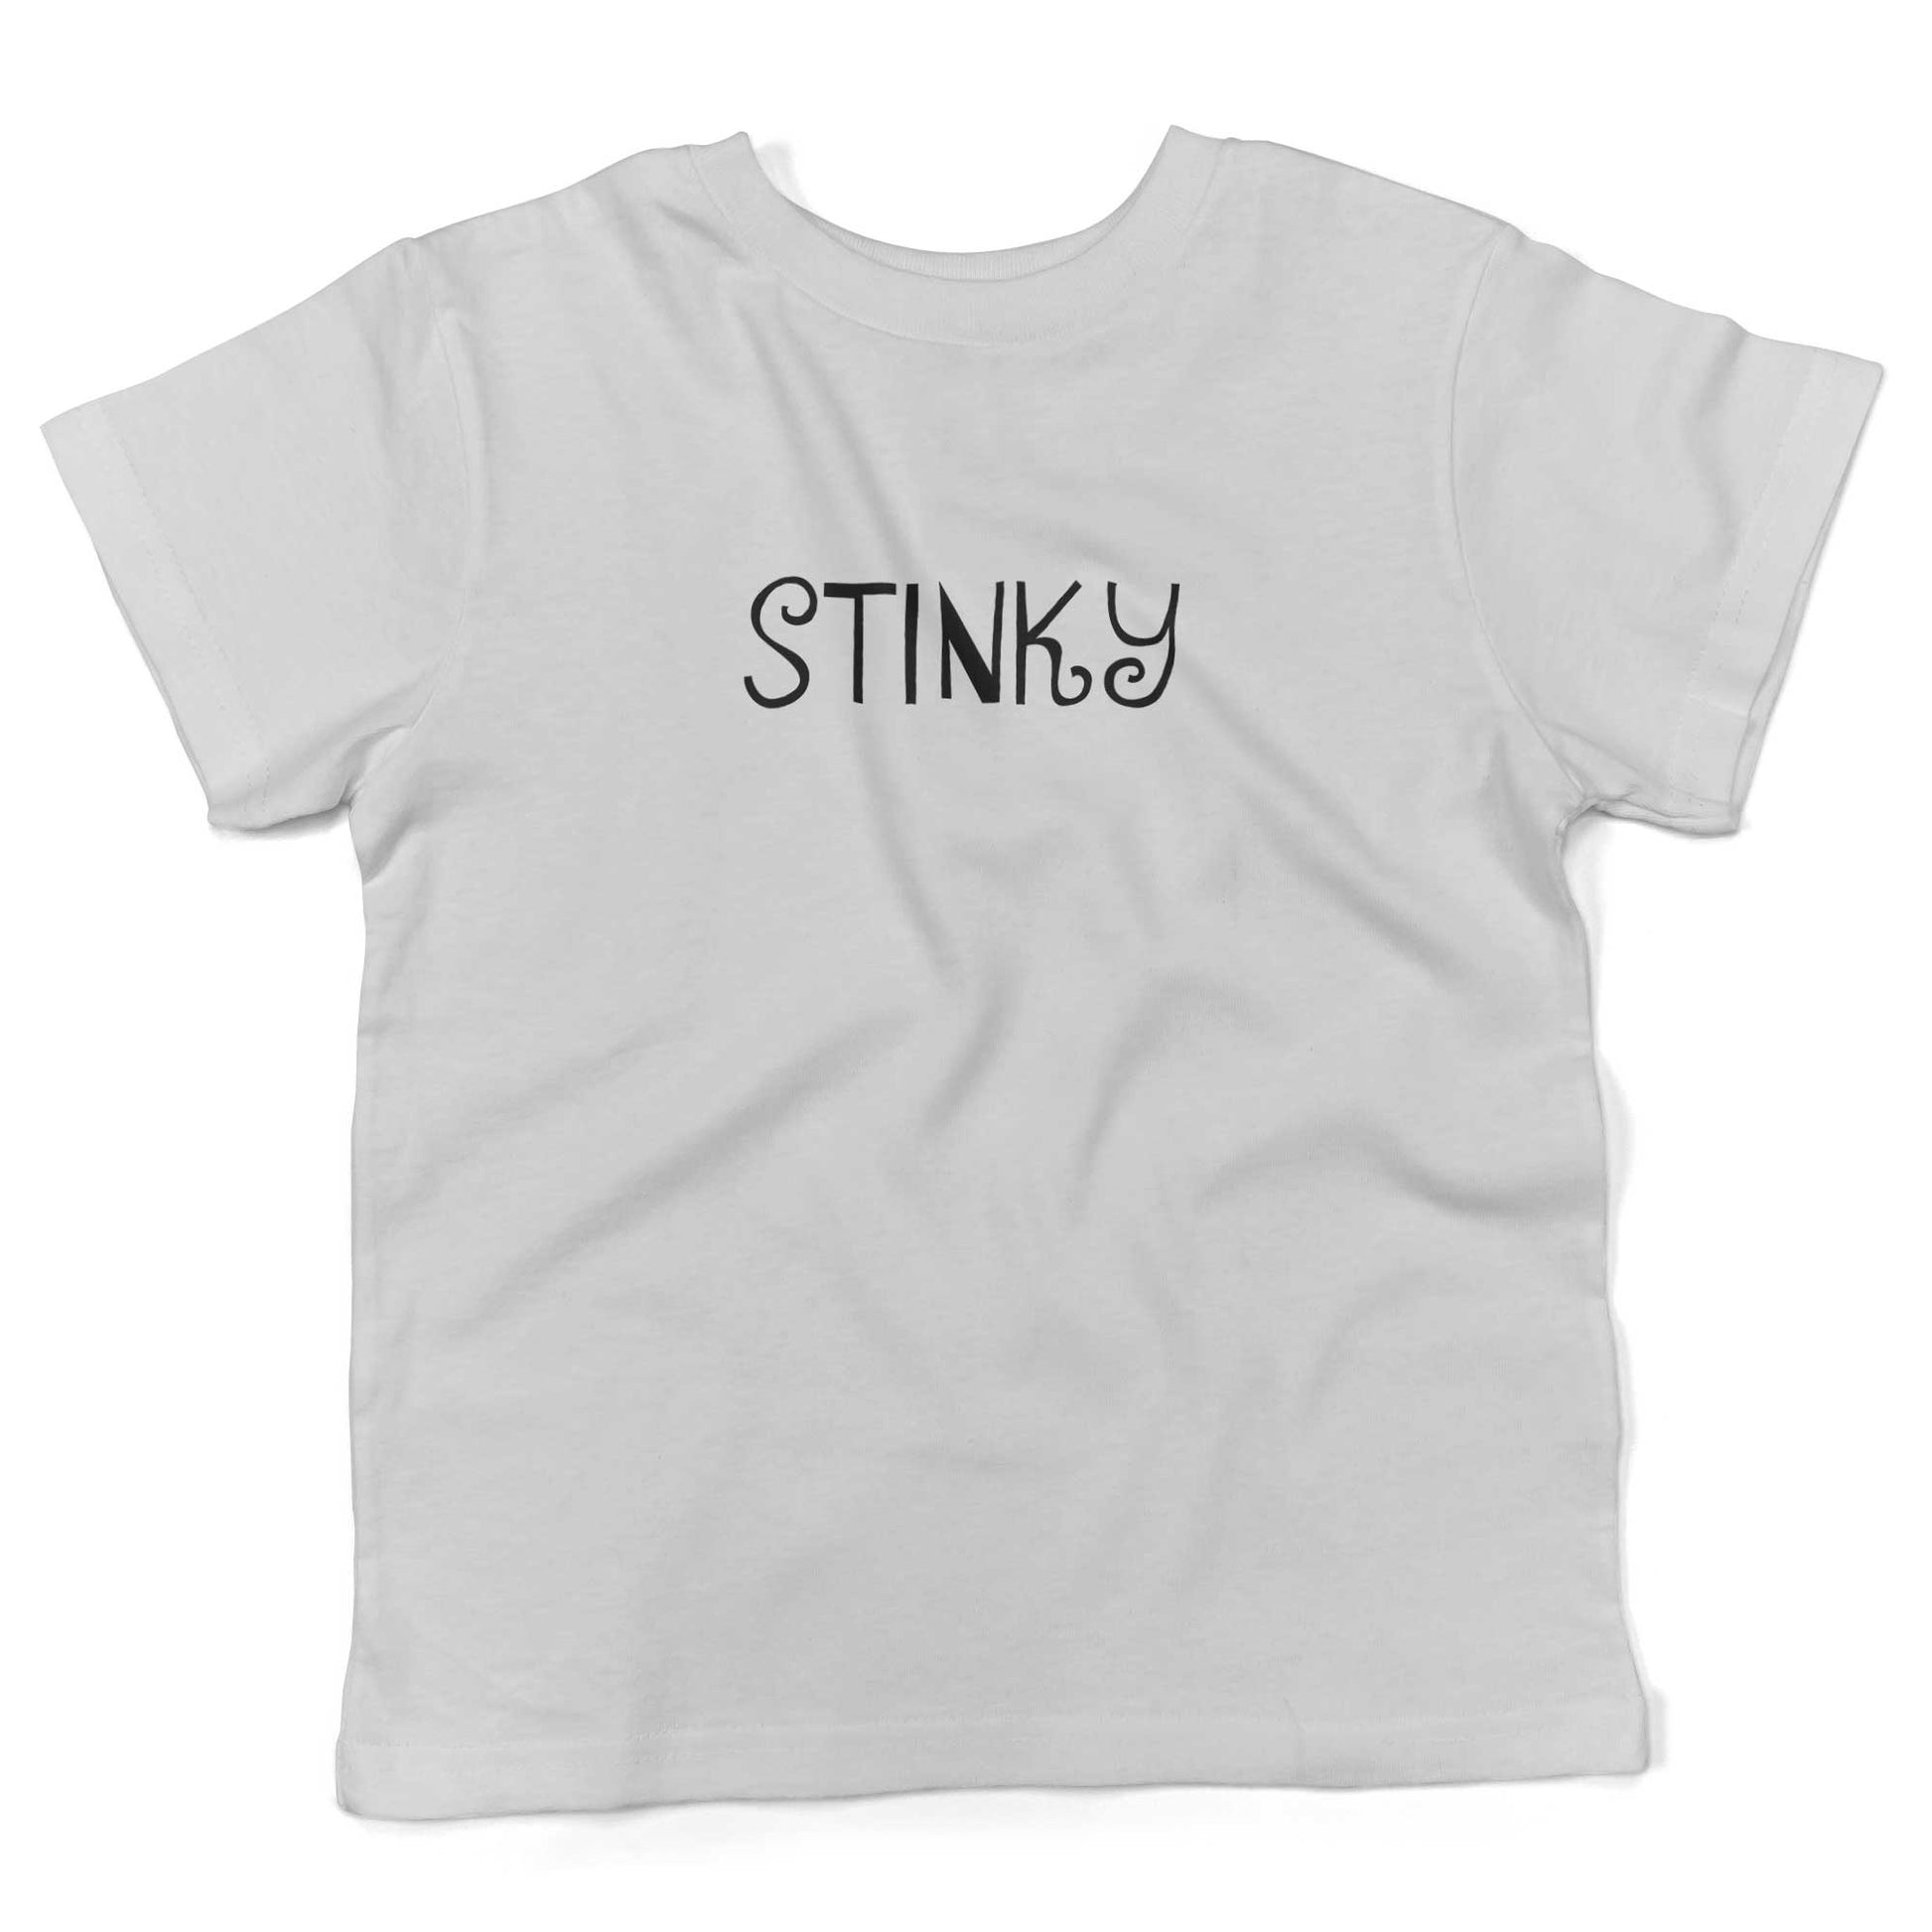 Stinky Toddler Shirt-White-2T